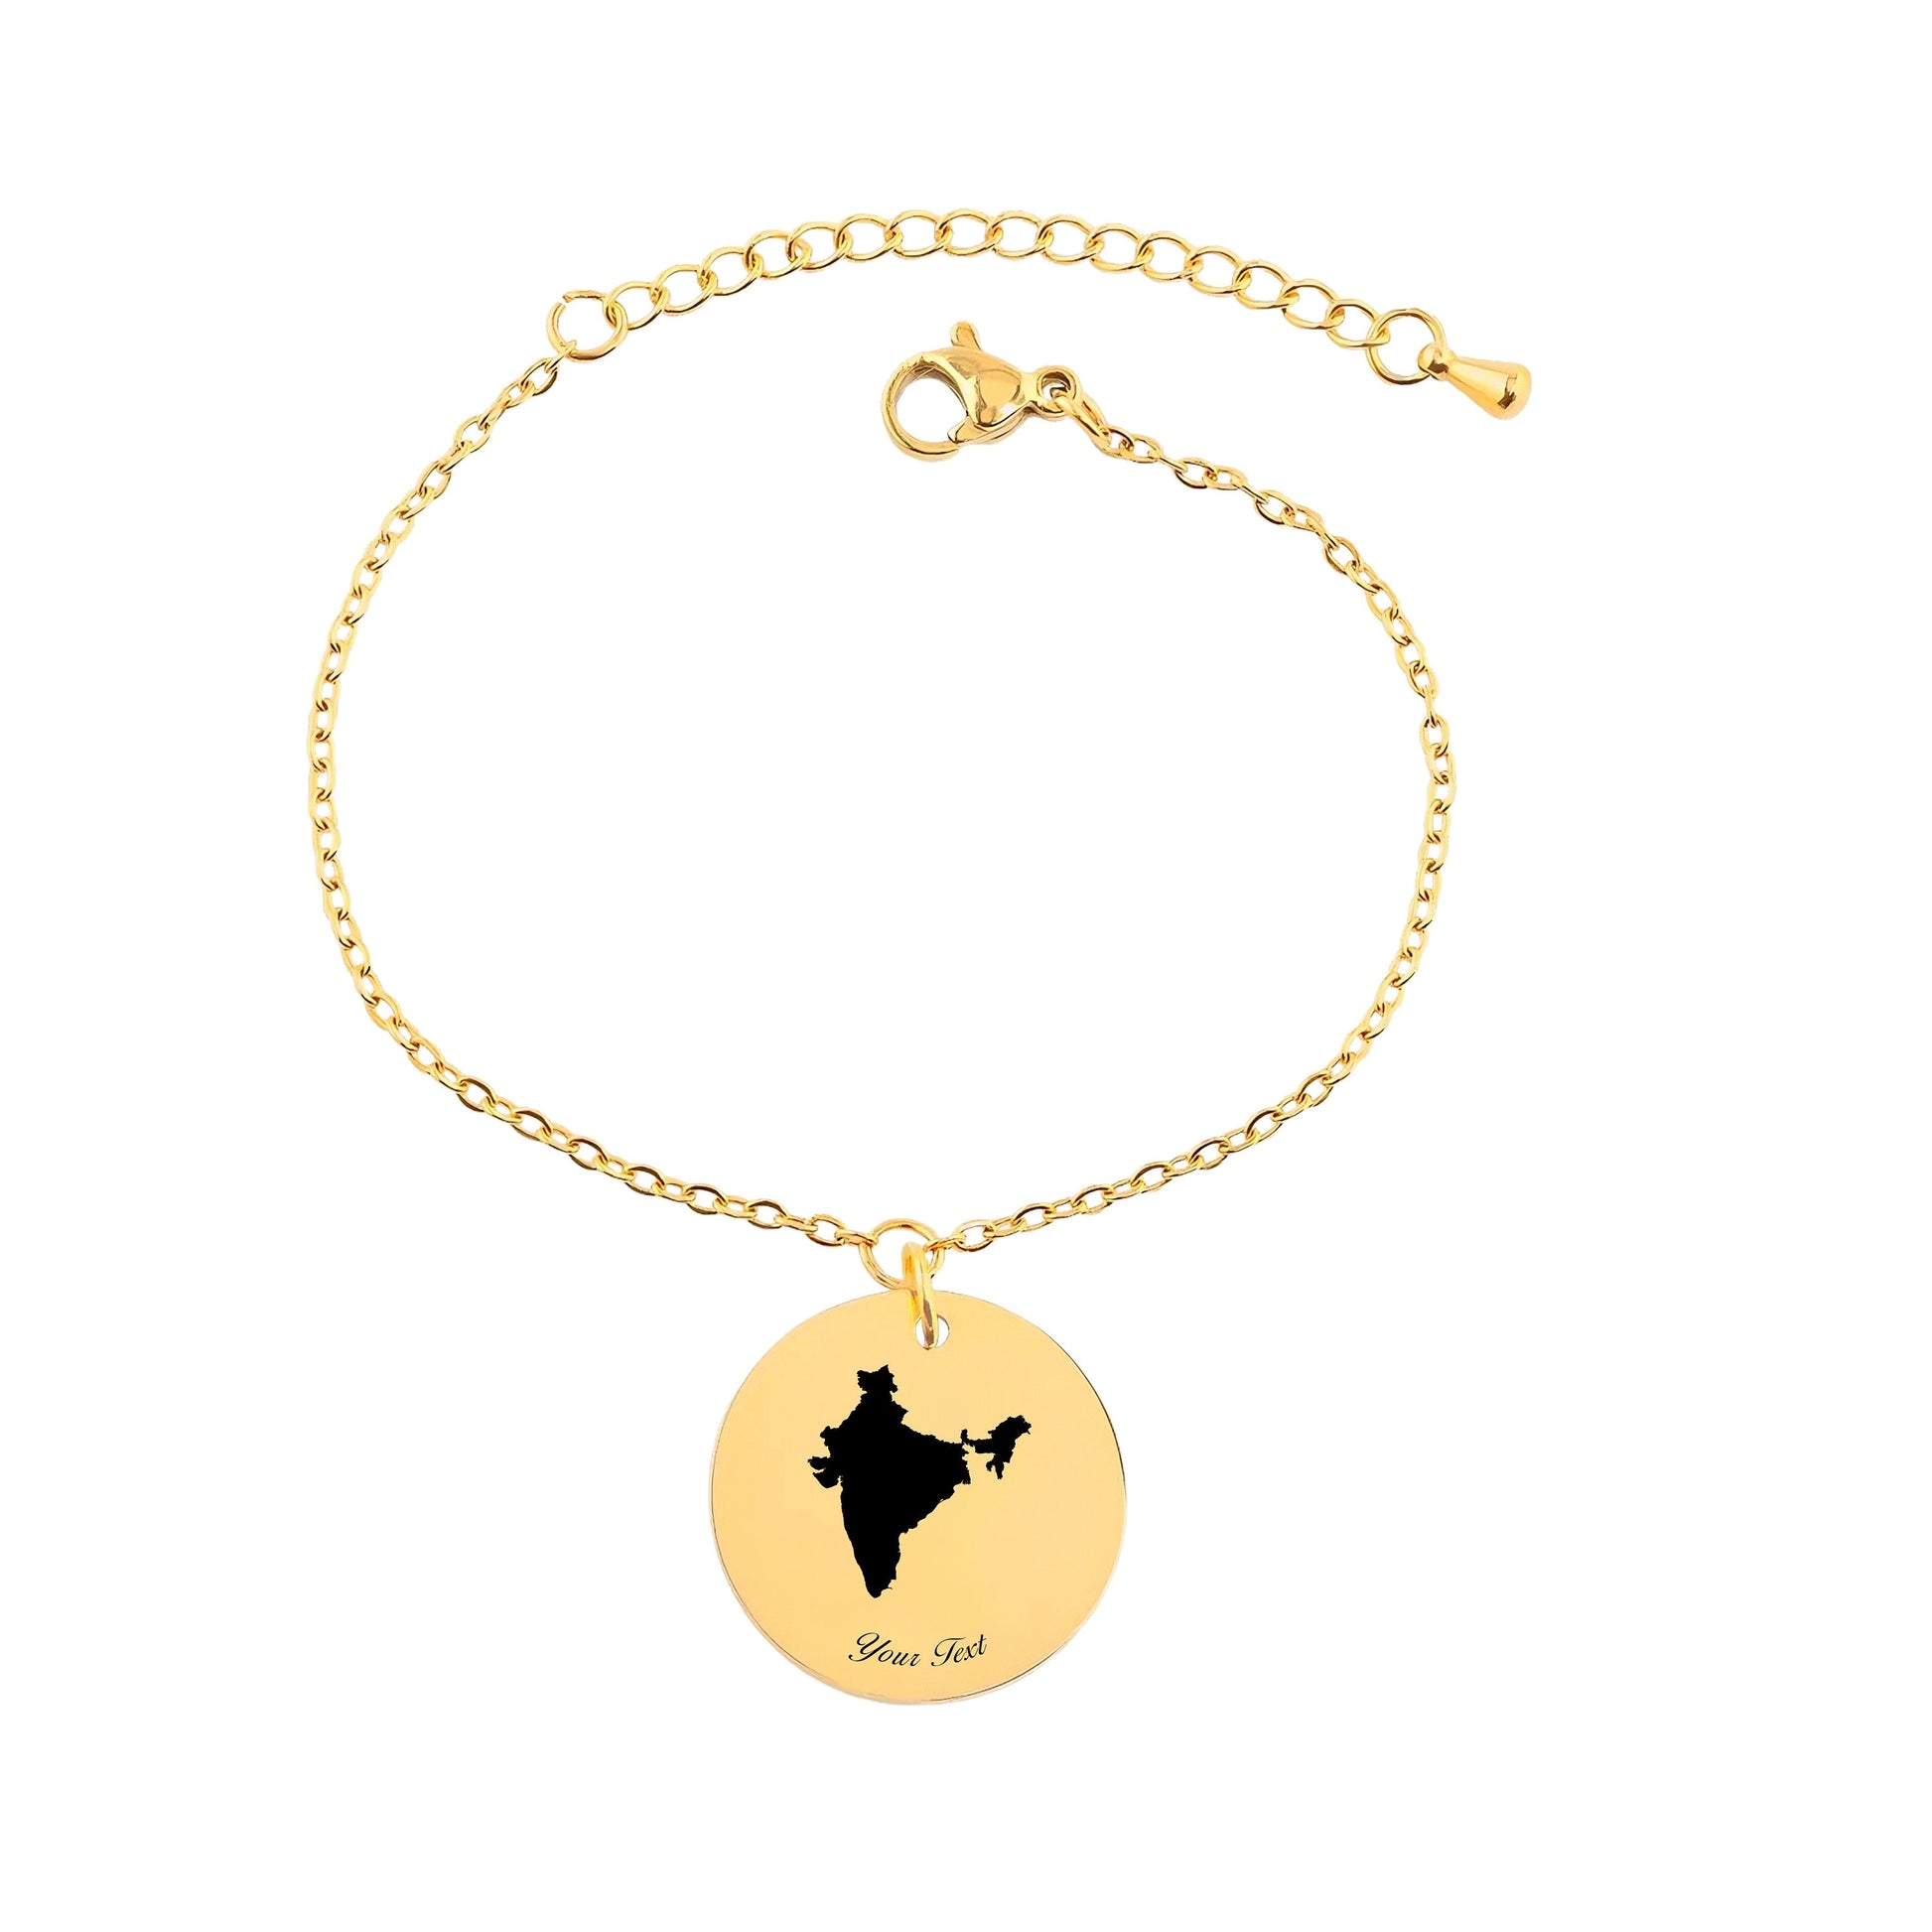 India Country Map Bracelet, Your Name Bracelet, Minimalist Bracelet, Personalized Gift, 14K Gold Bracelet, Gift For Him Her